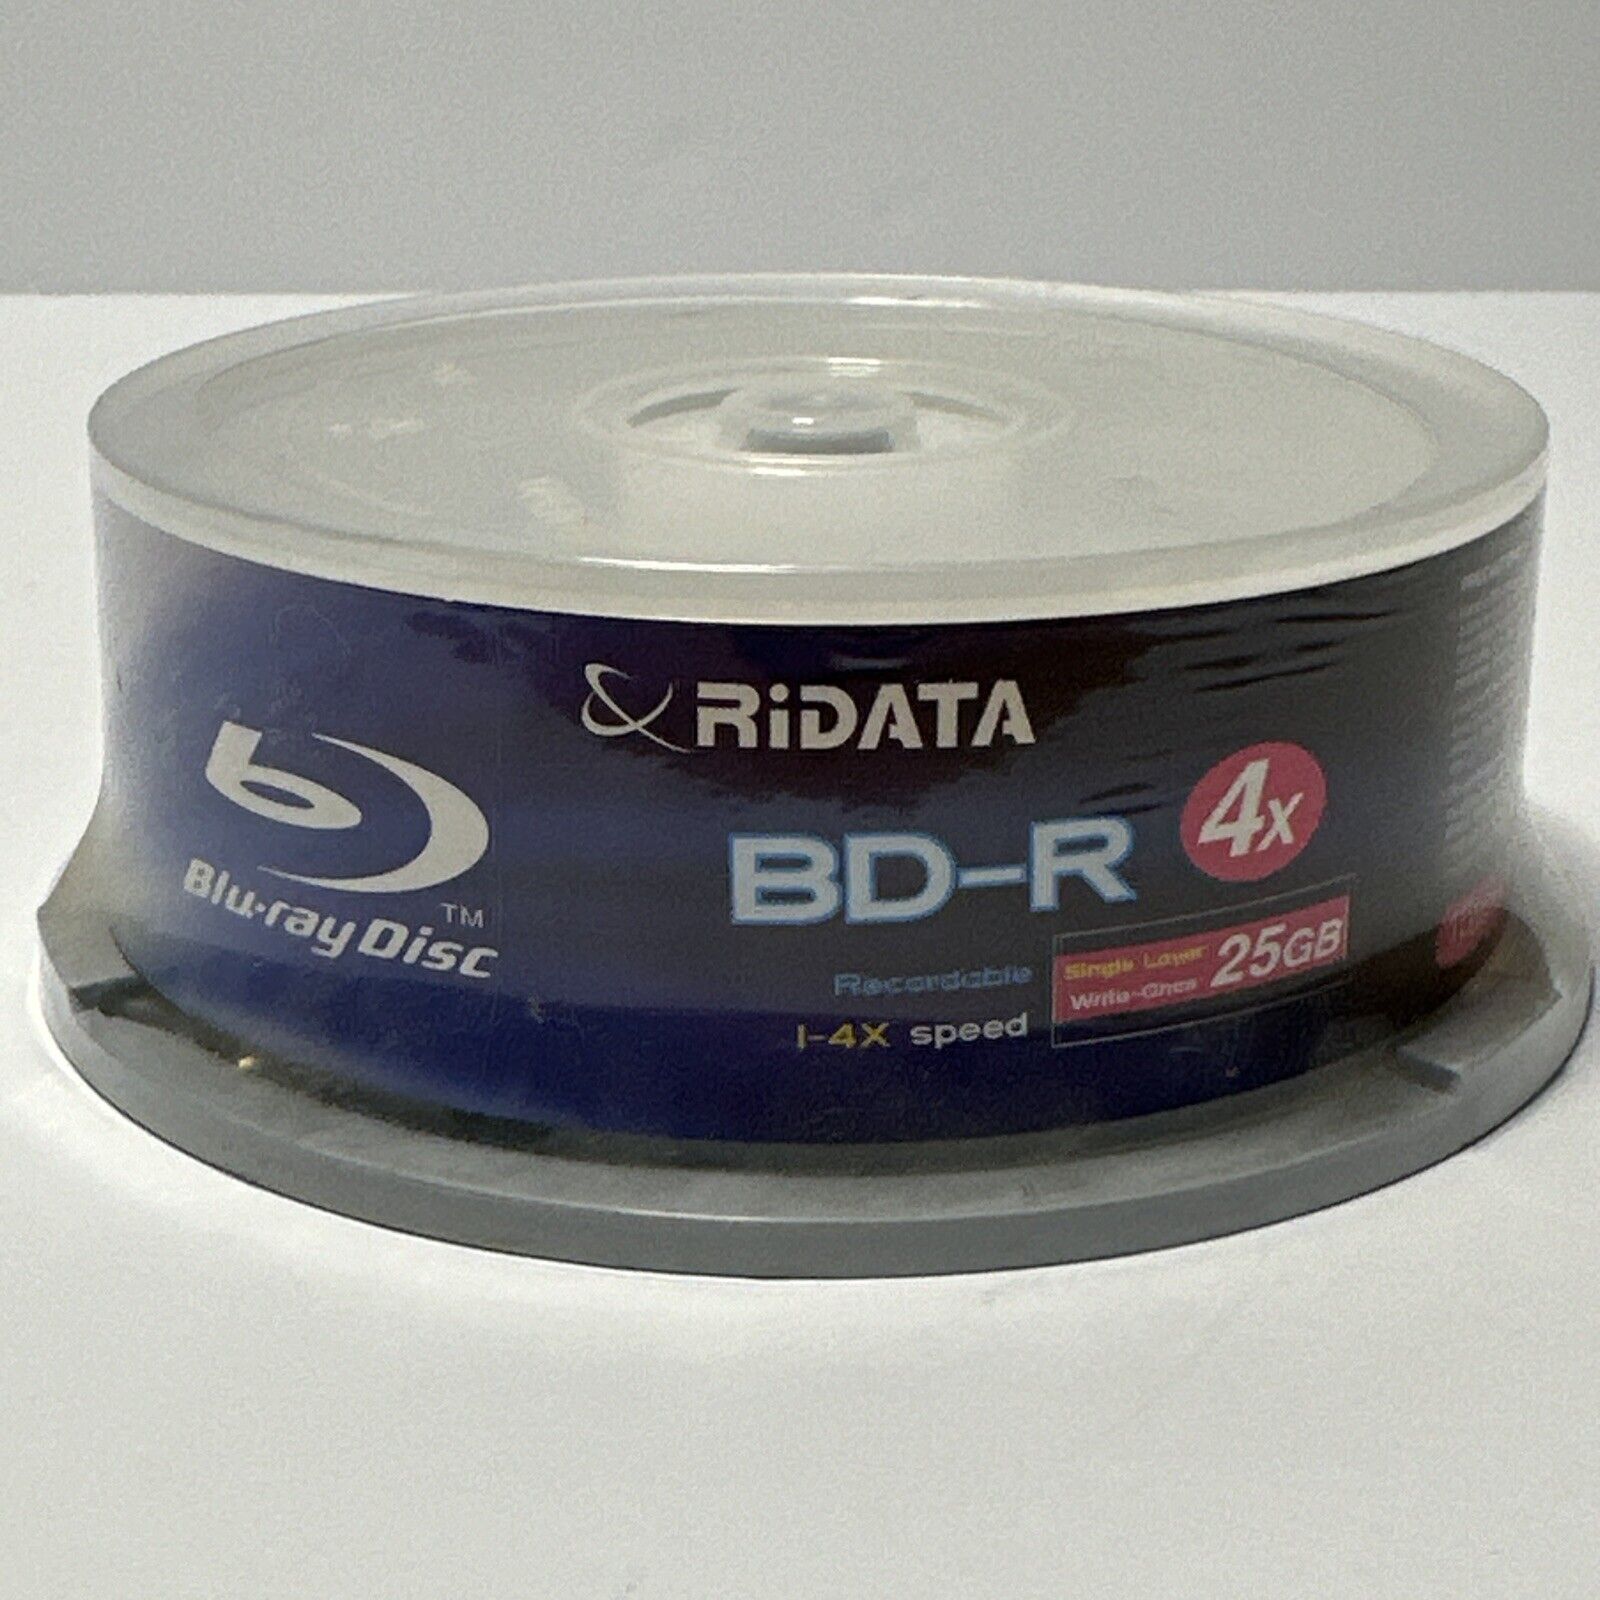 15 Pack Ridata 4X 25GB BD-R Blu-ray Single Layer Recordable Black Media Disc.